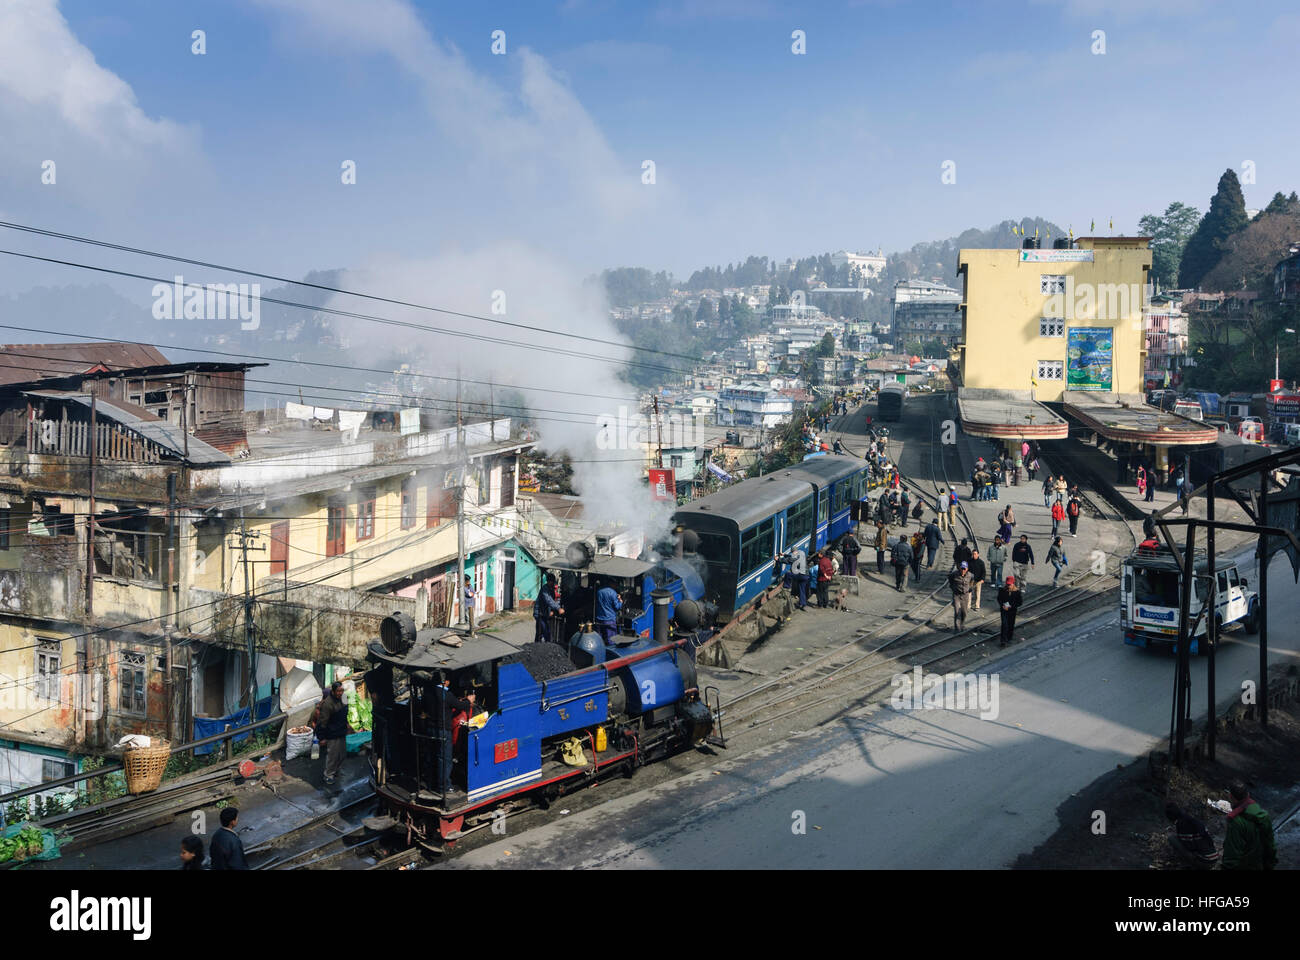 Darjeeling: El Ferrocarril Darjeeling del Himalaya en la estación de ferrocarril de Darjeeling, Bengala Occidental, India Westbengalen Foto de stock